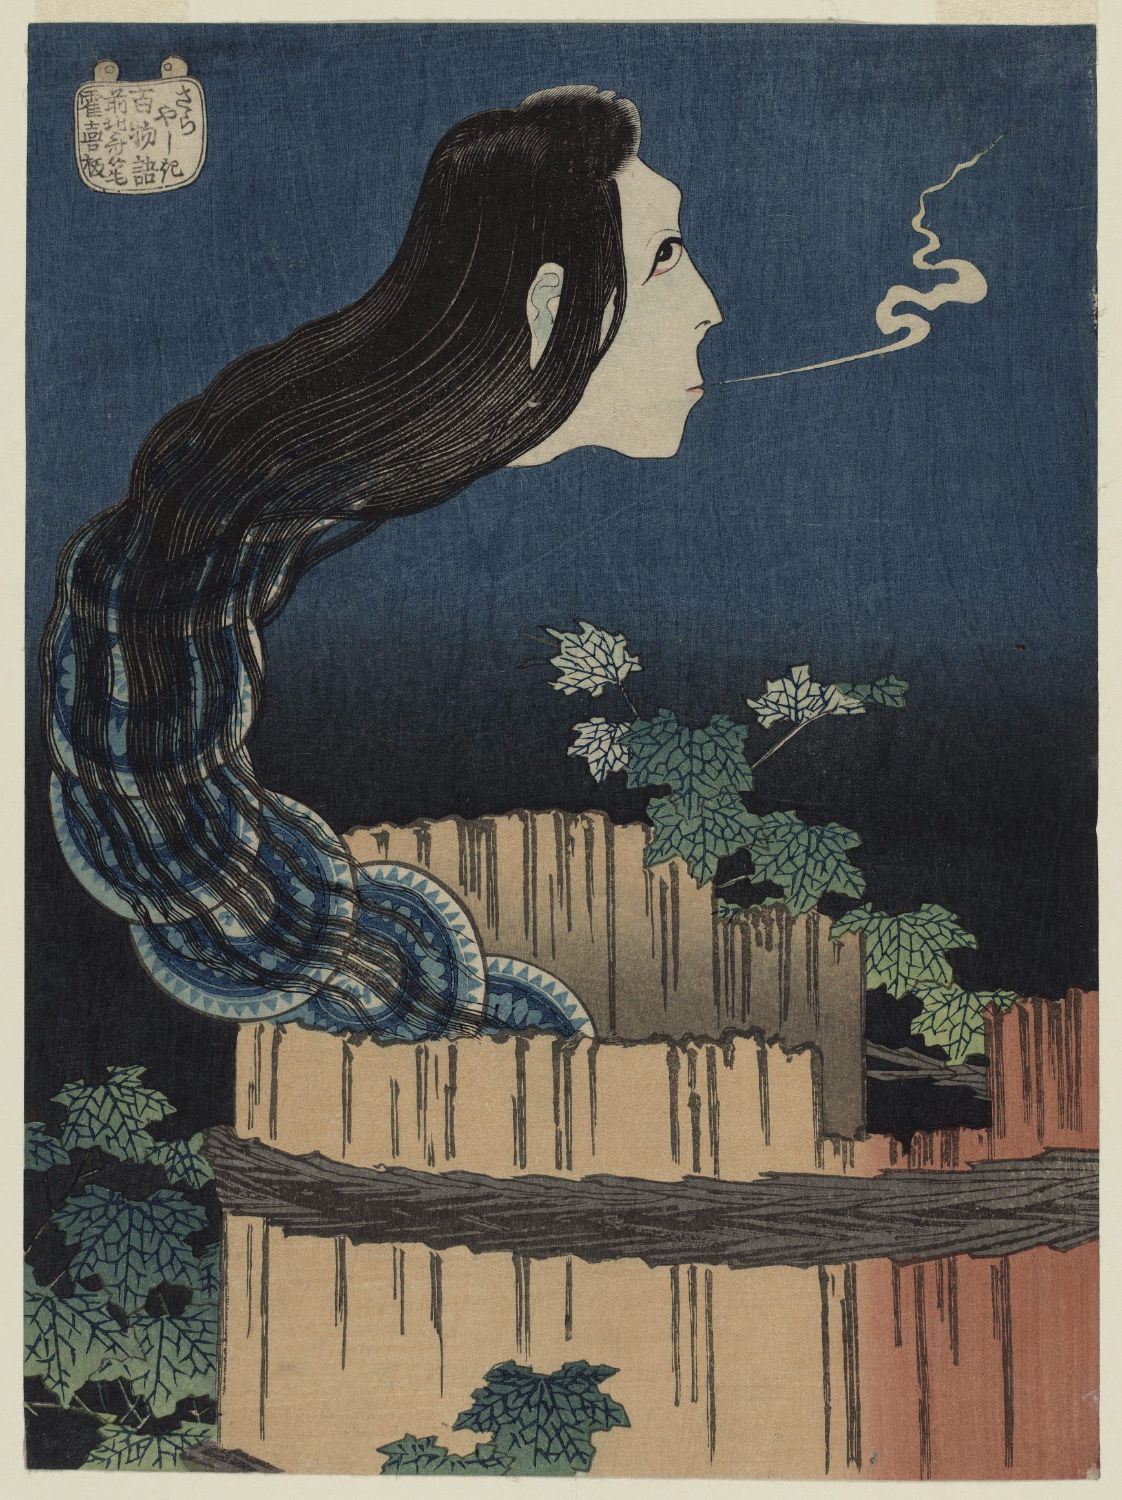 Conacul farfuriilor by Katsushika Hokusai - 1831/32 - 23.7 x 17.6 cm 